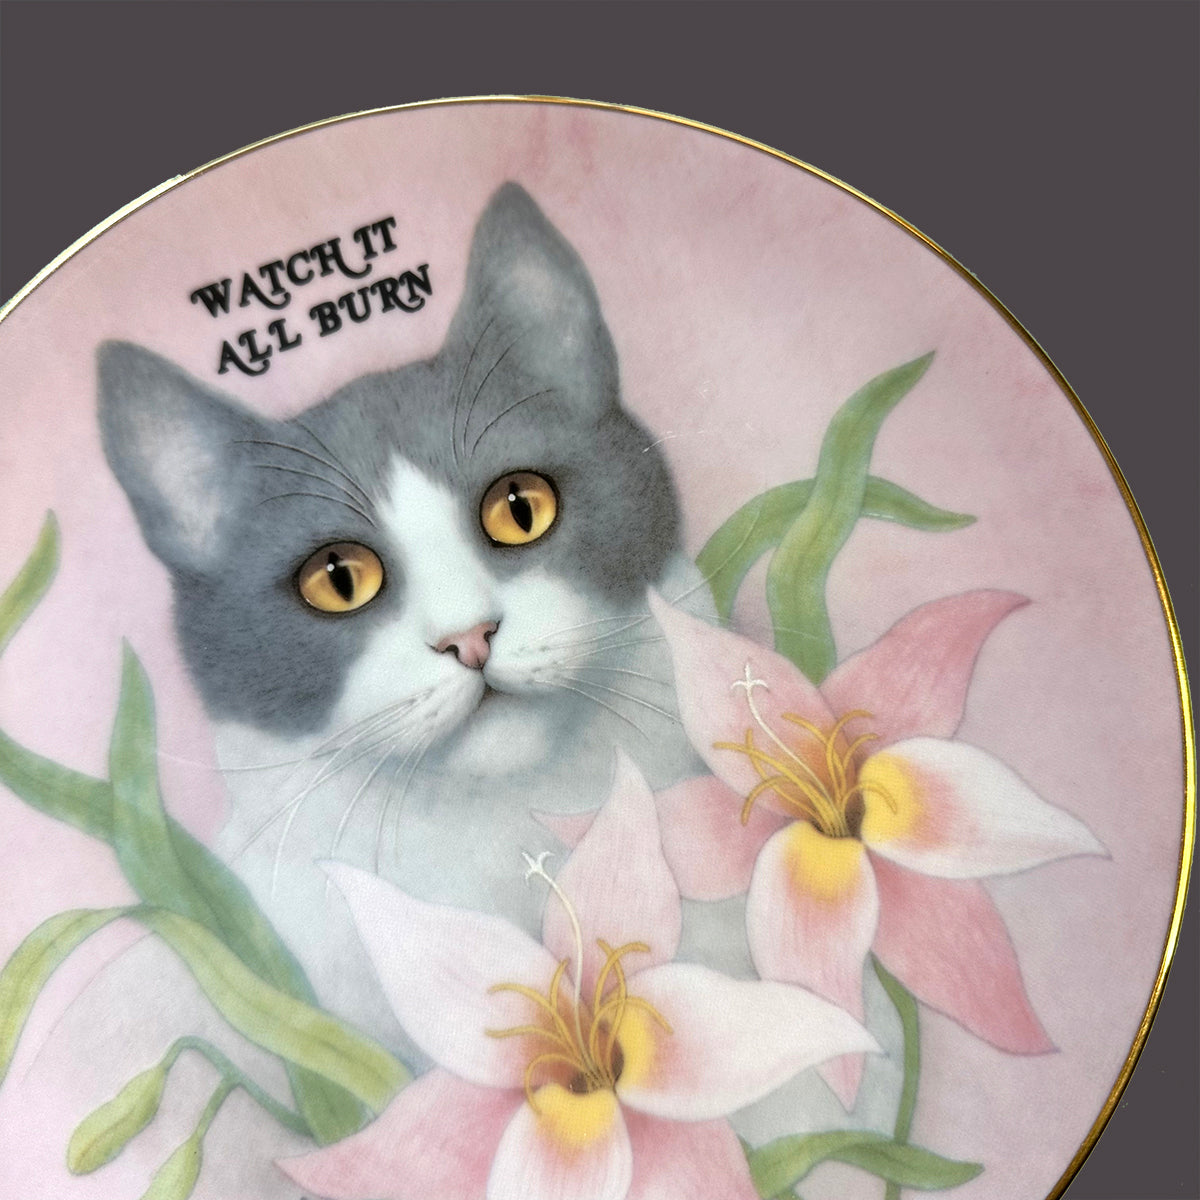 Vintage Art Plate - Cat plate - "Watch it all Burn"